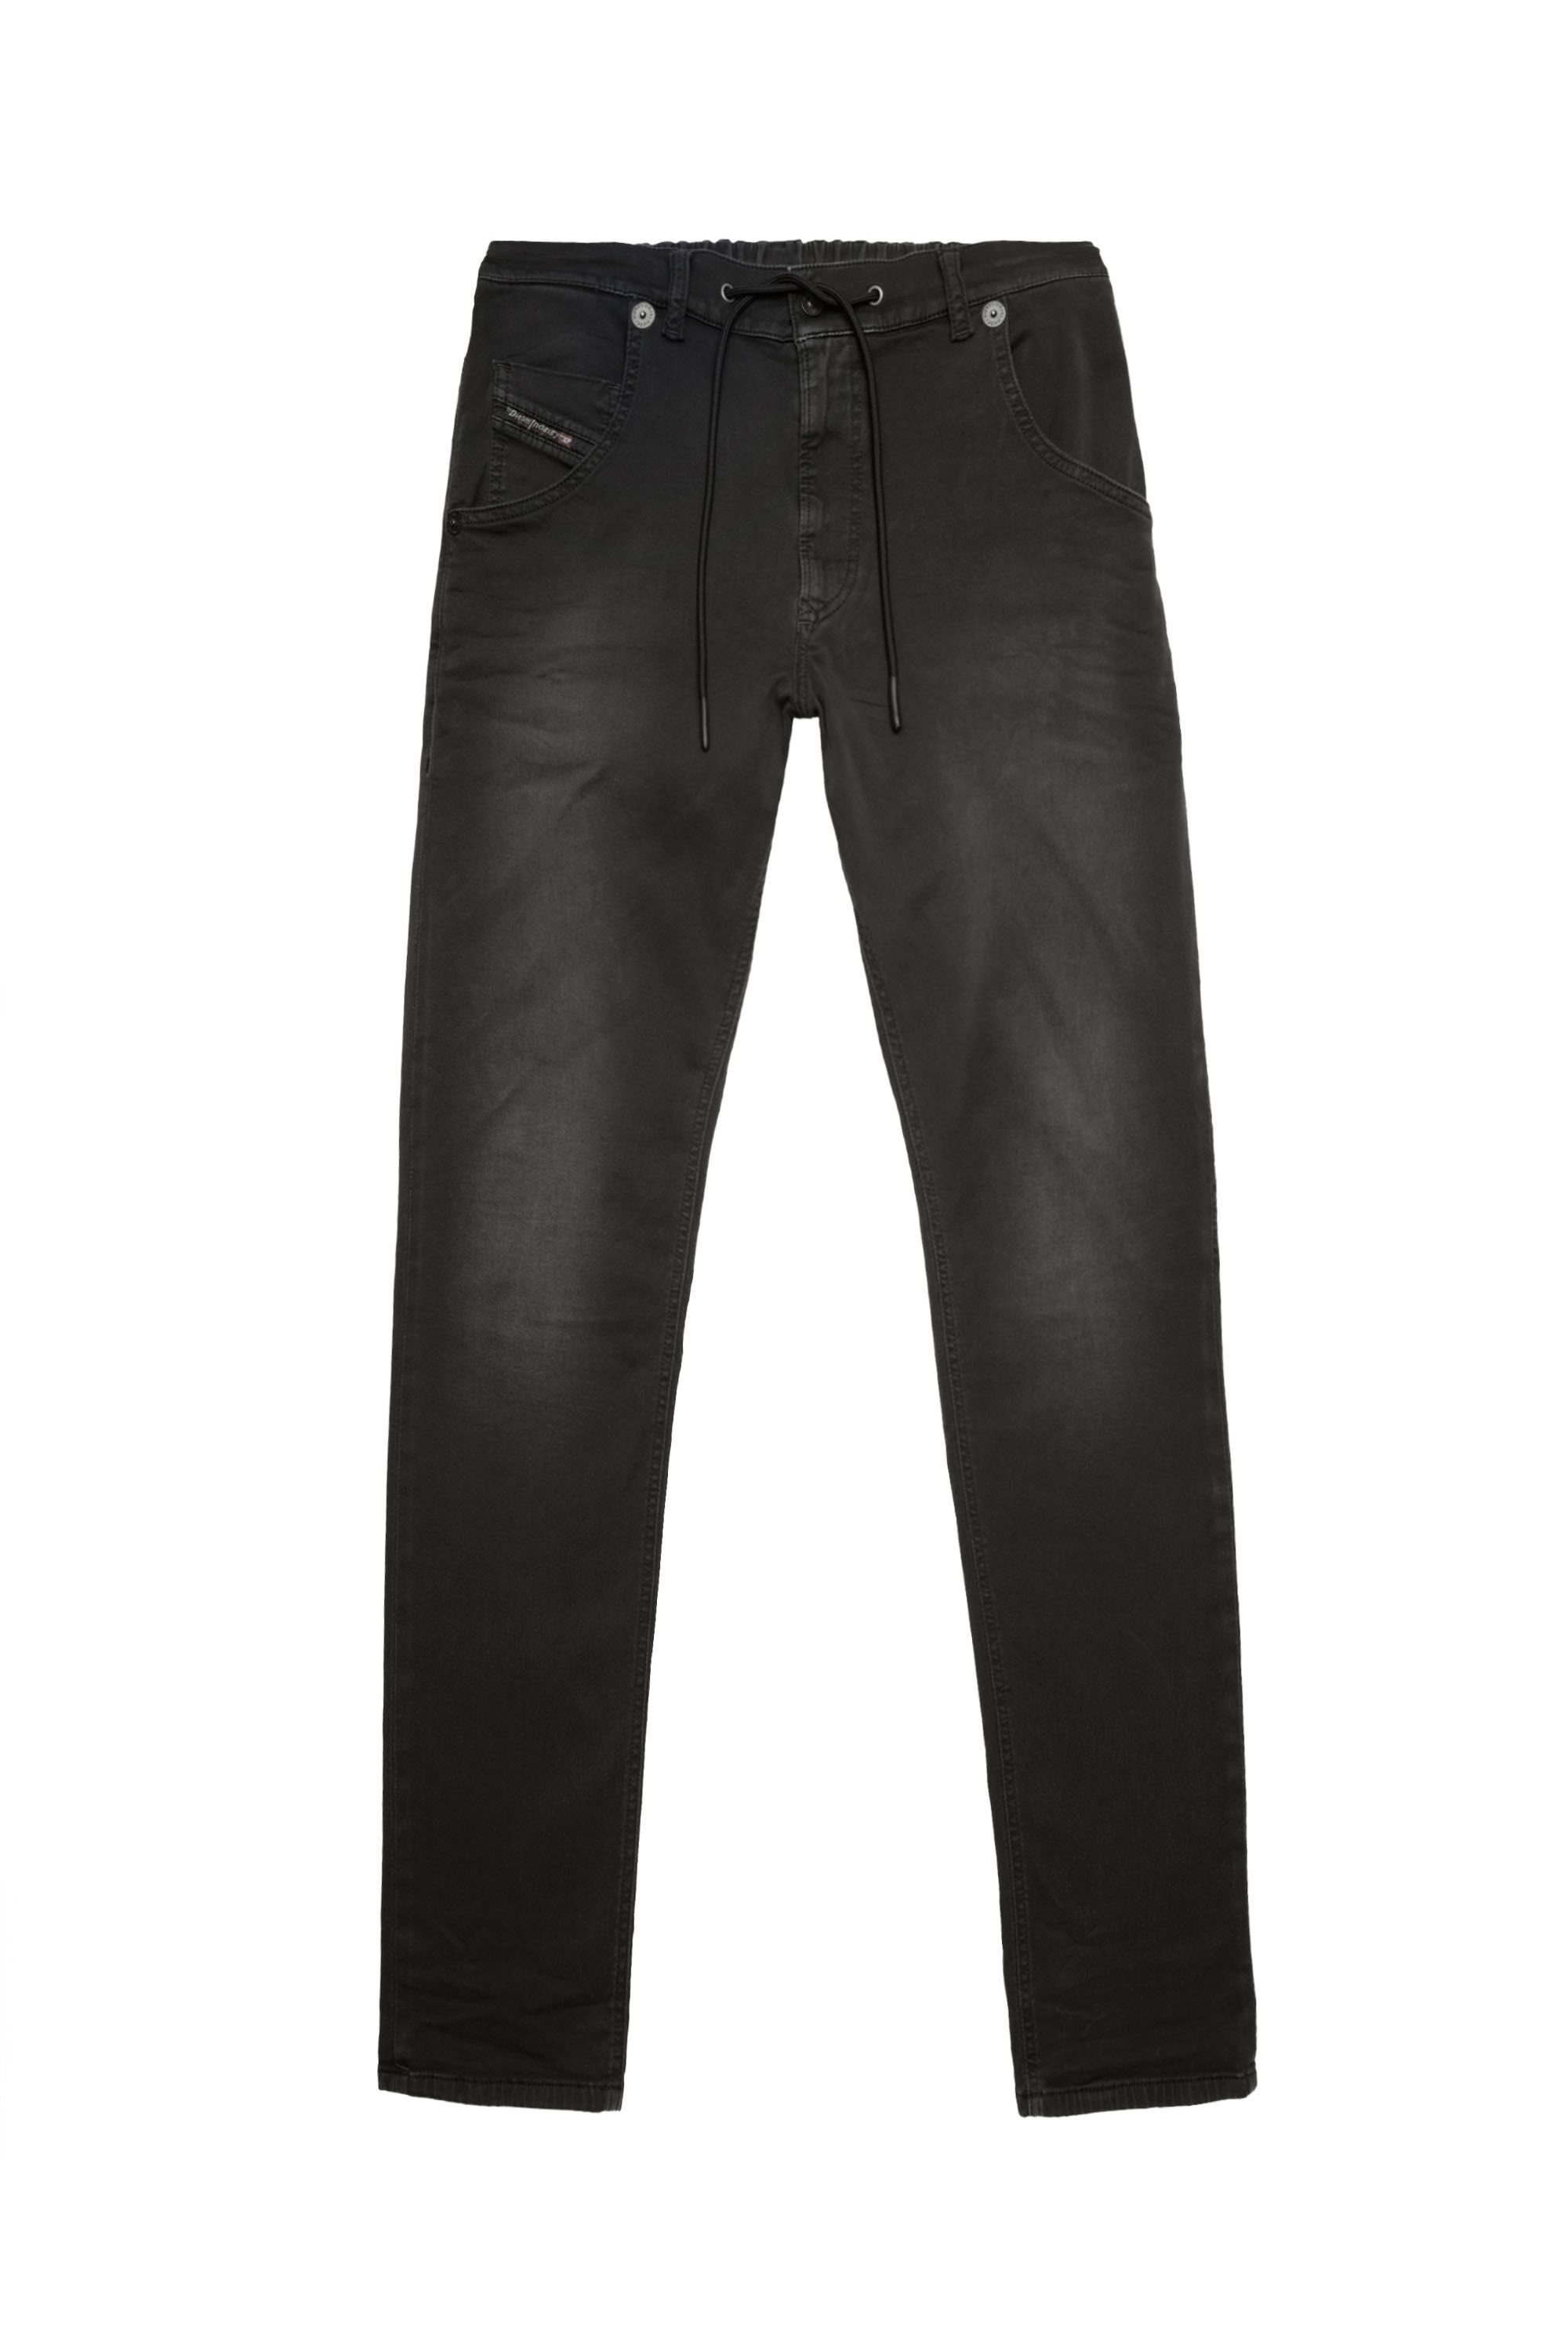 Diesel Krooley JoggJeans® tapered trousers - Black